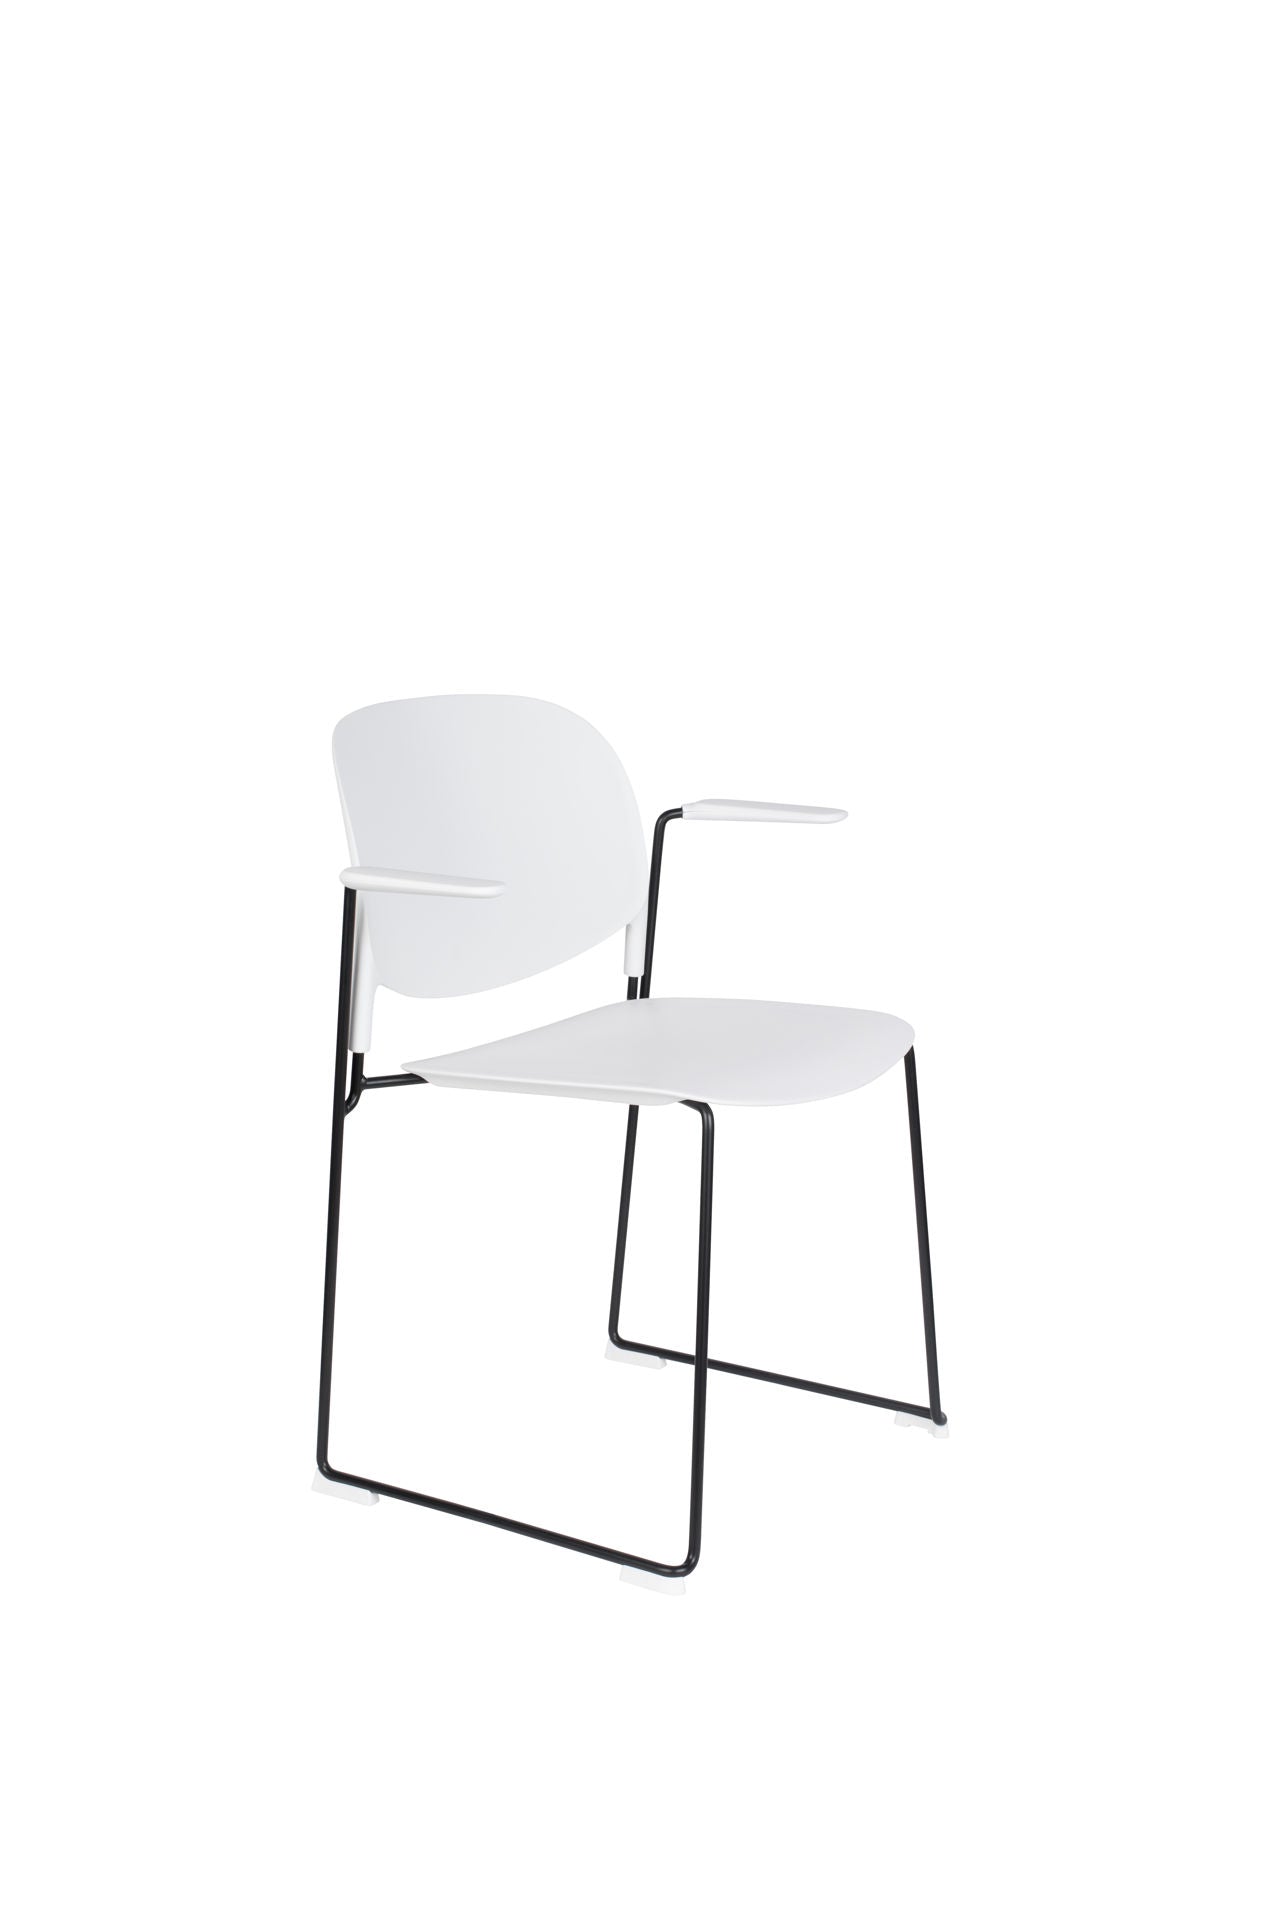 Nancy's Frostburg Chair - Retro - White, Black - Polypropylene, Steel, Plastic - 53 cm x 63.5 cm x 80.5 cm